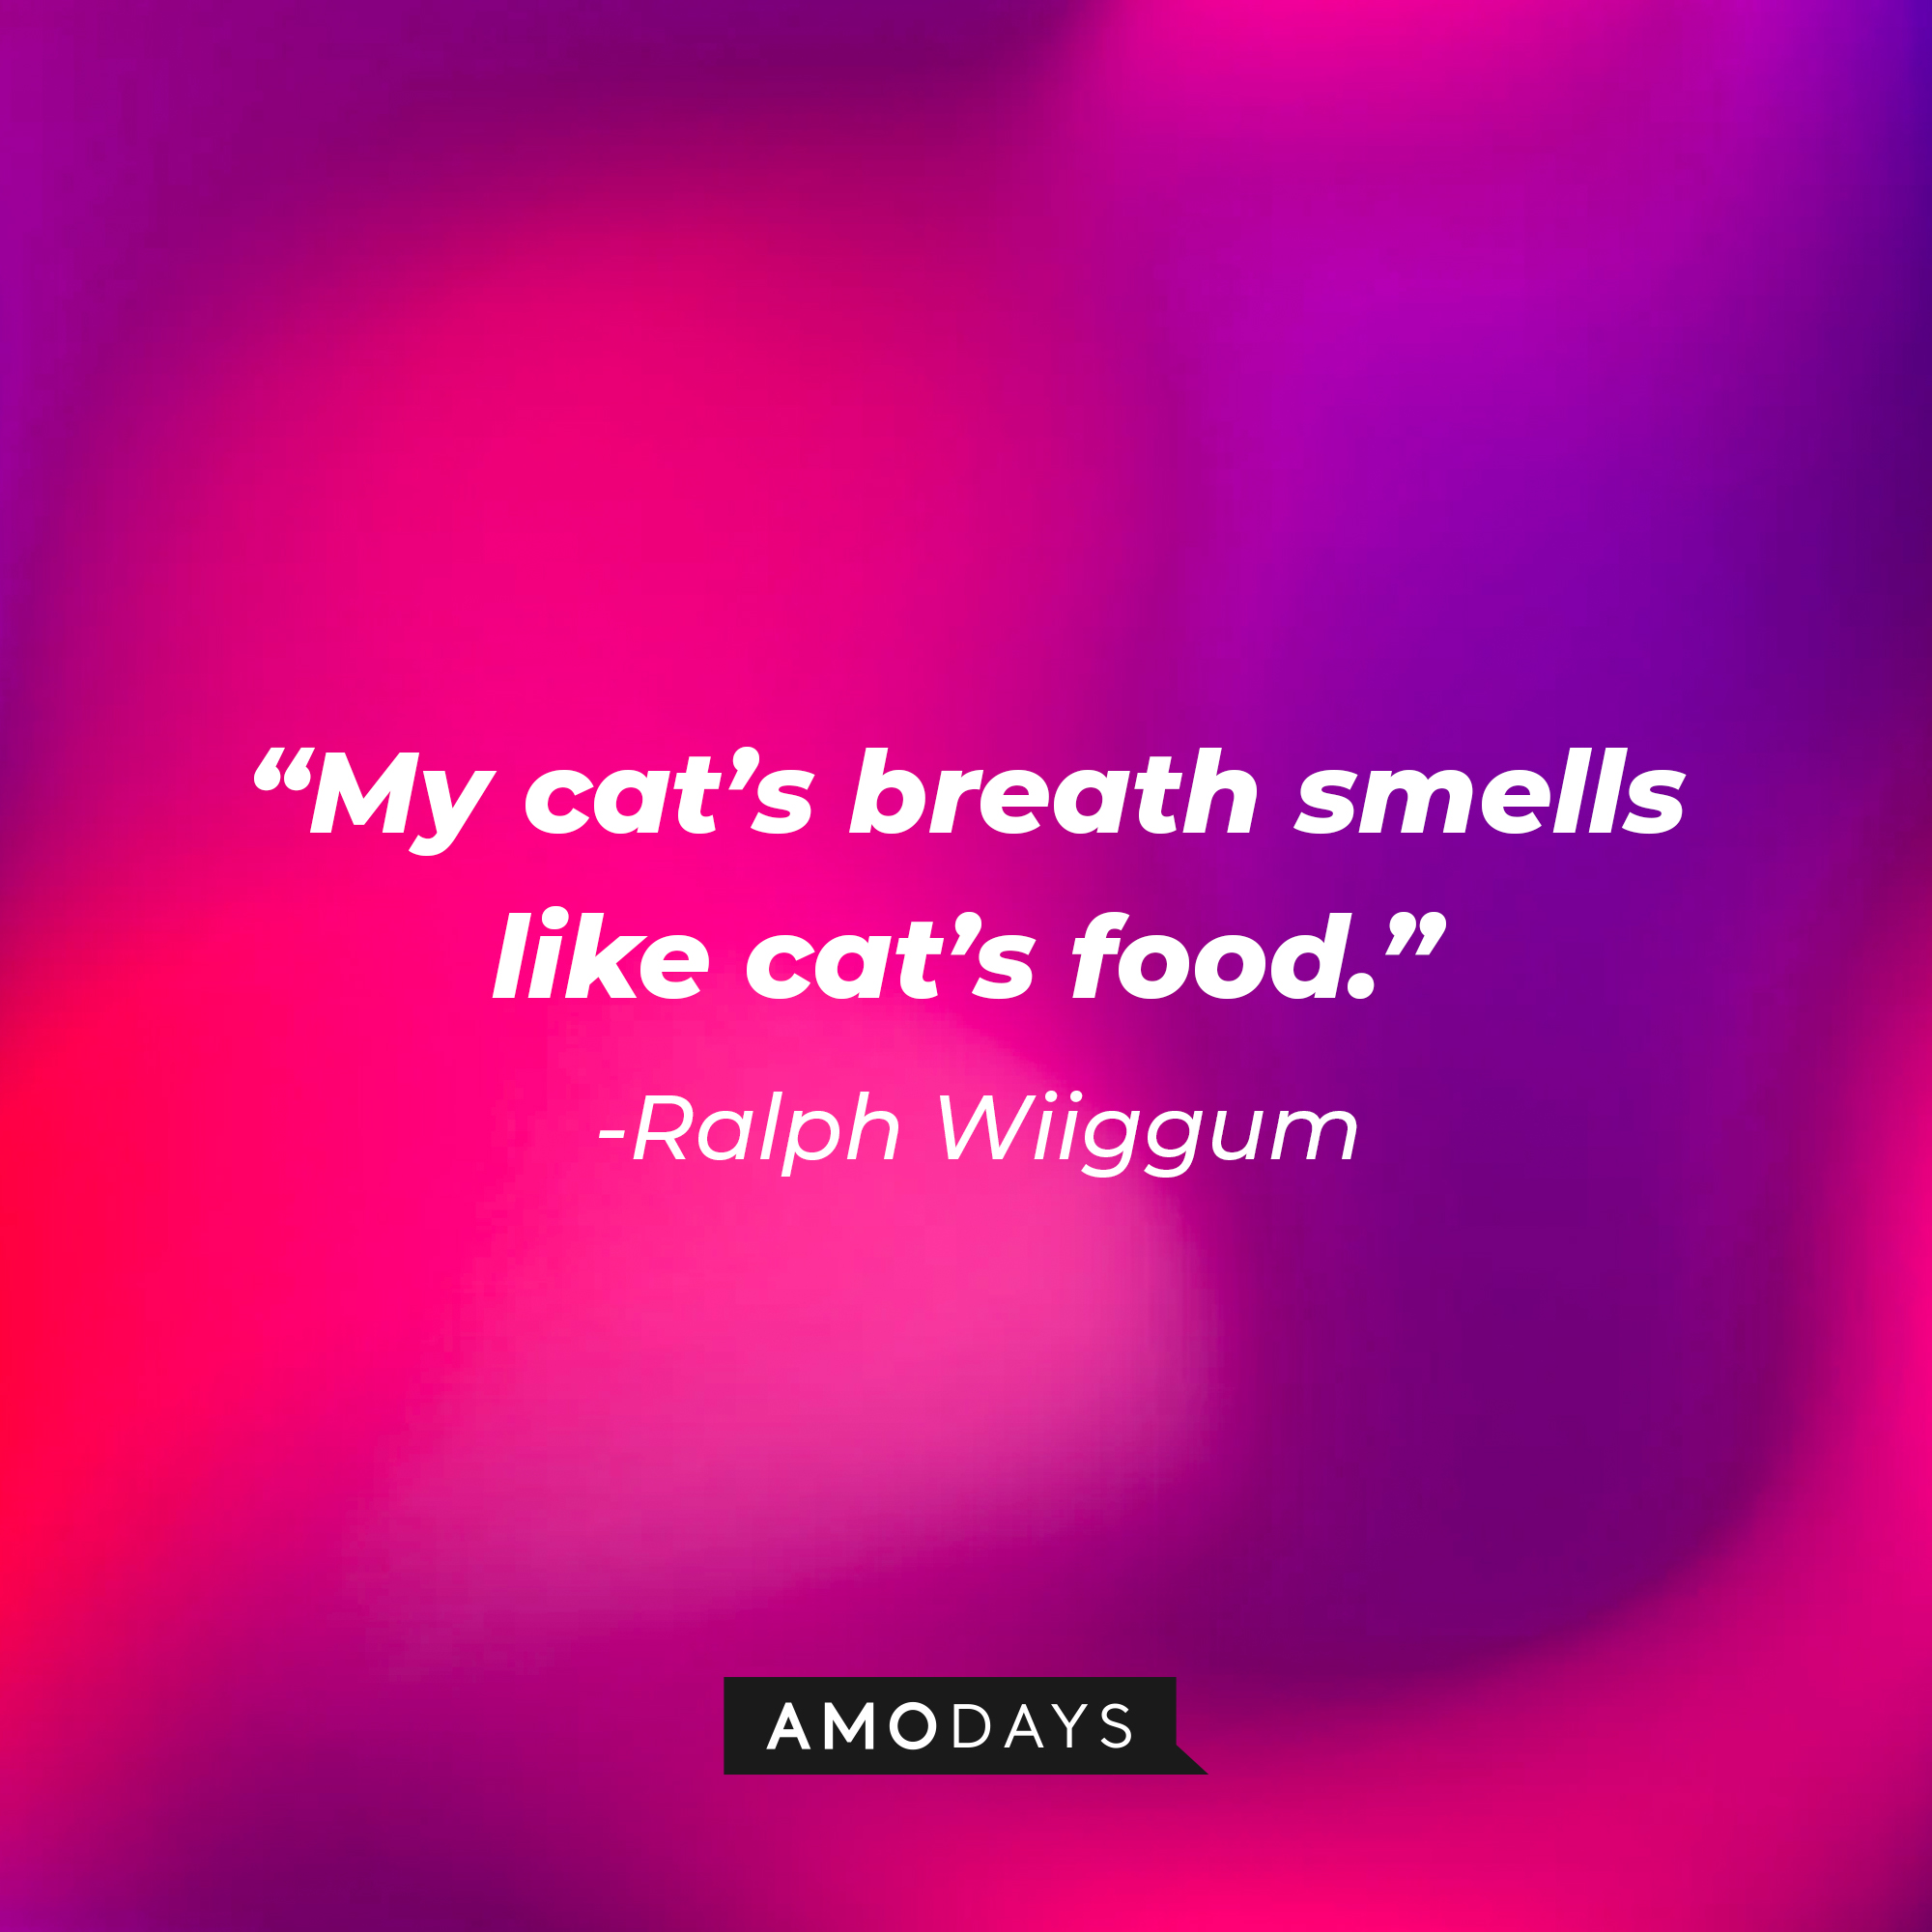 Ralph Wiiggum’s quote:“My cat’s breathe smells like cat’s food.”  |  Source: AmoDays